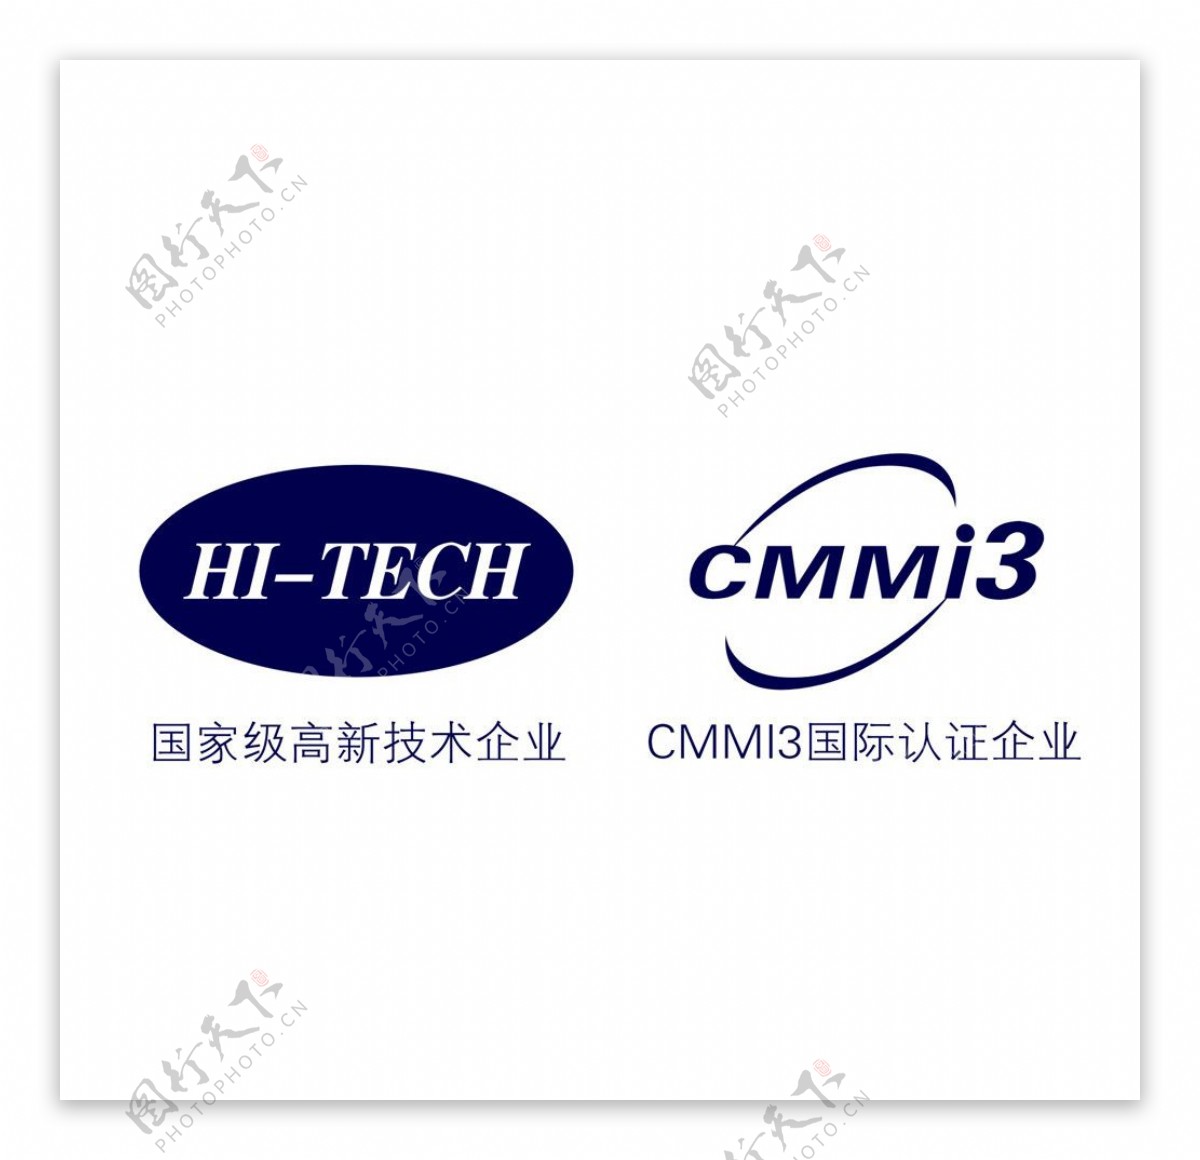 CMMI3认证标志图片